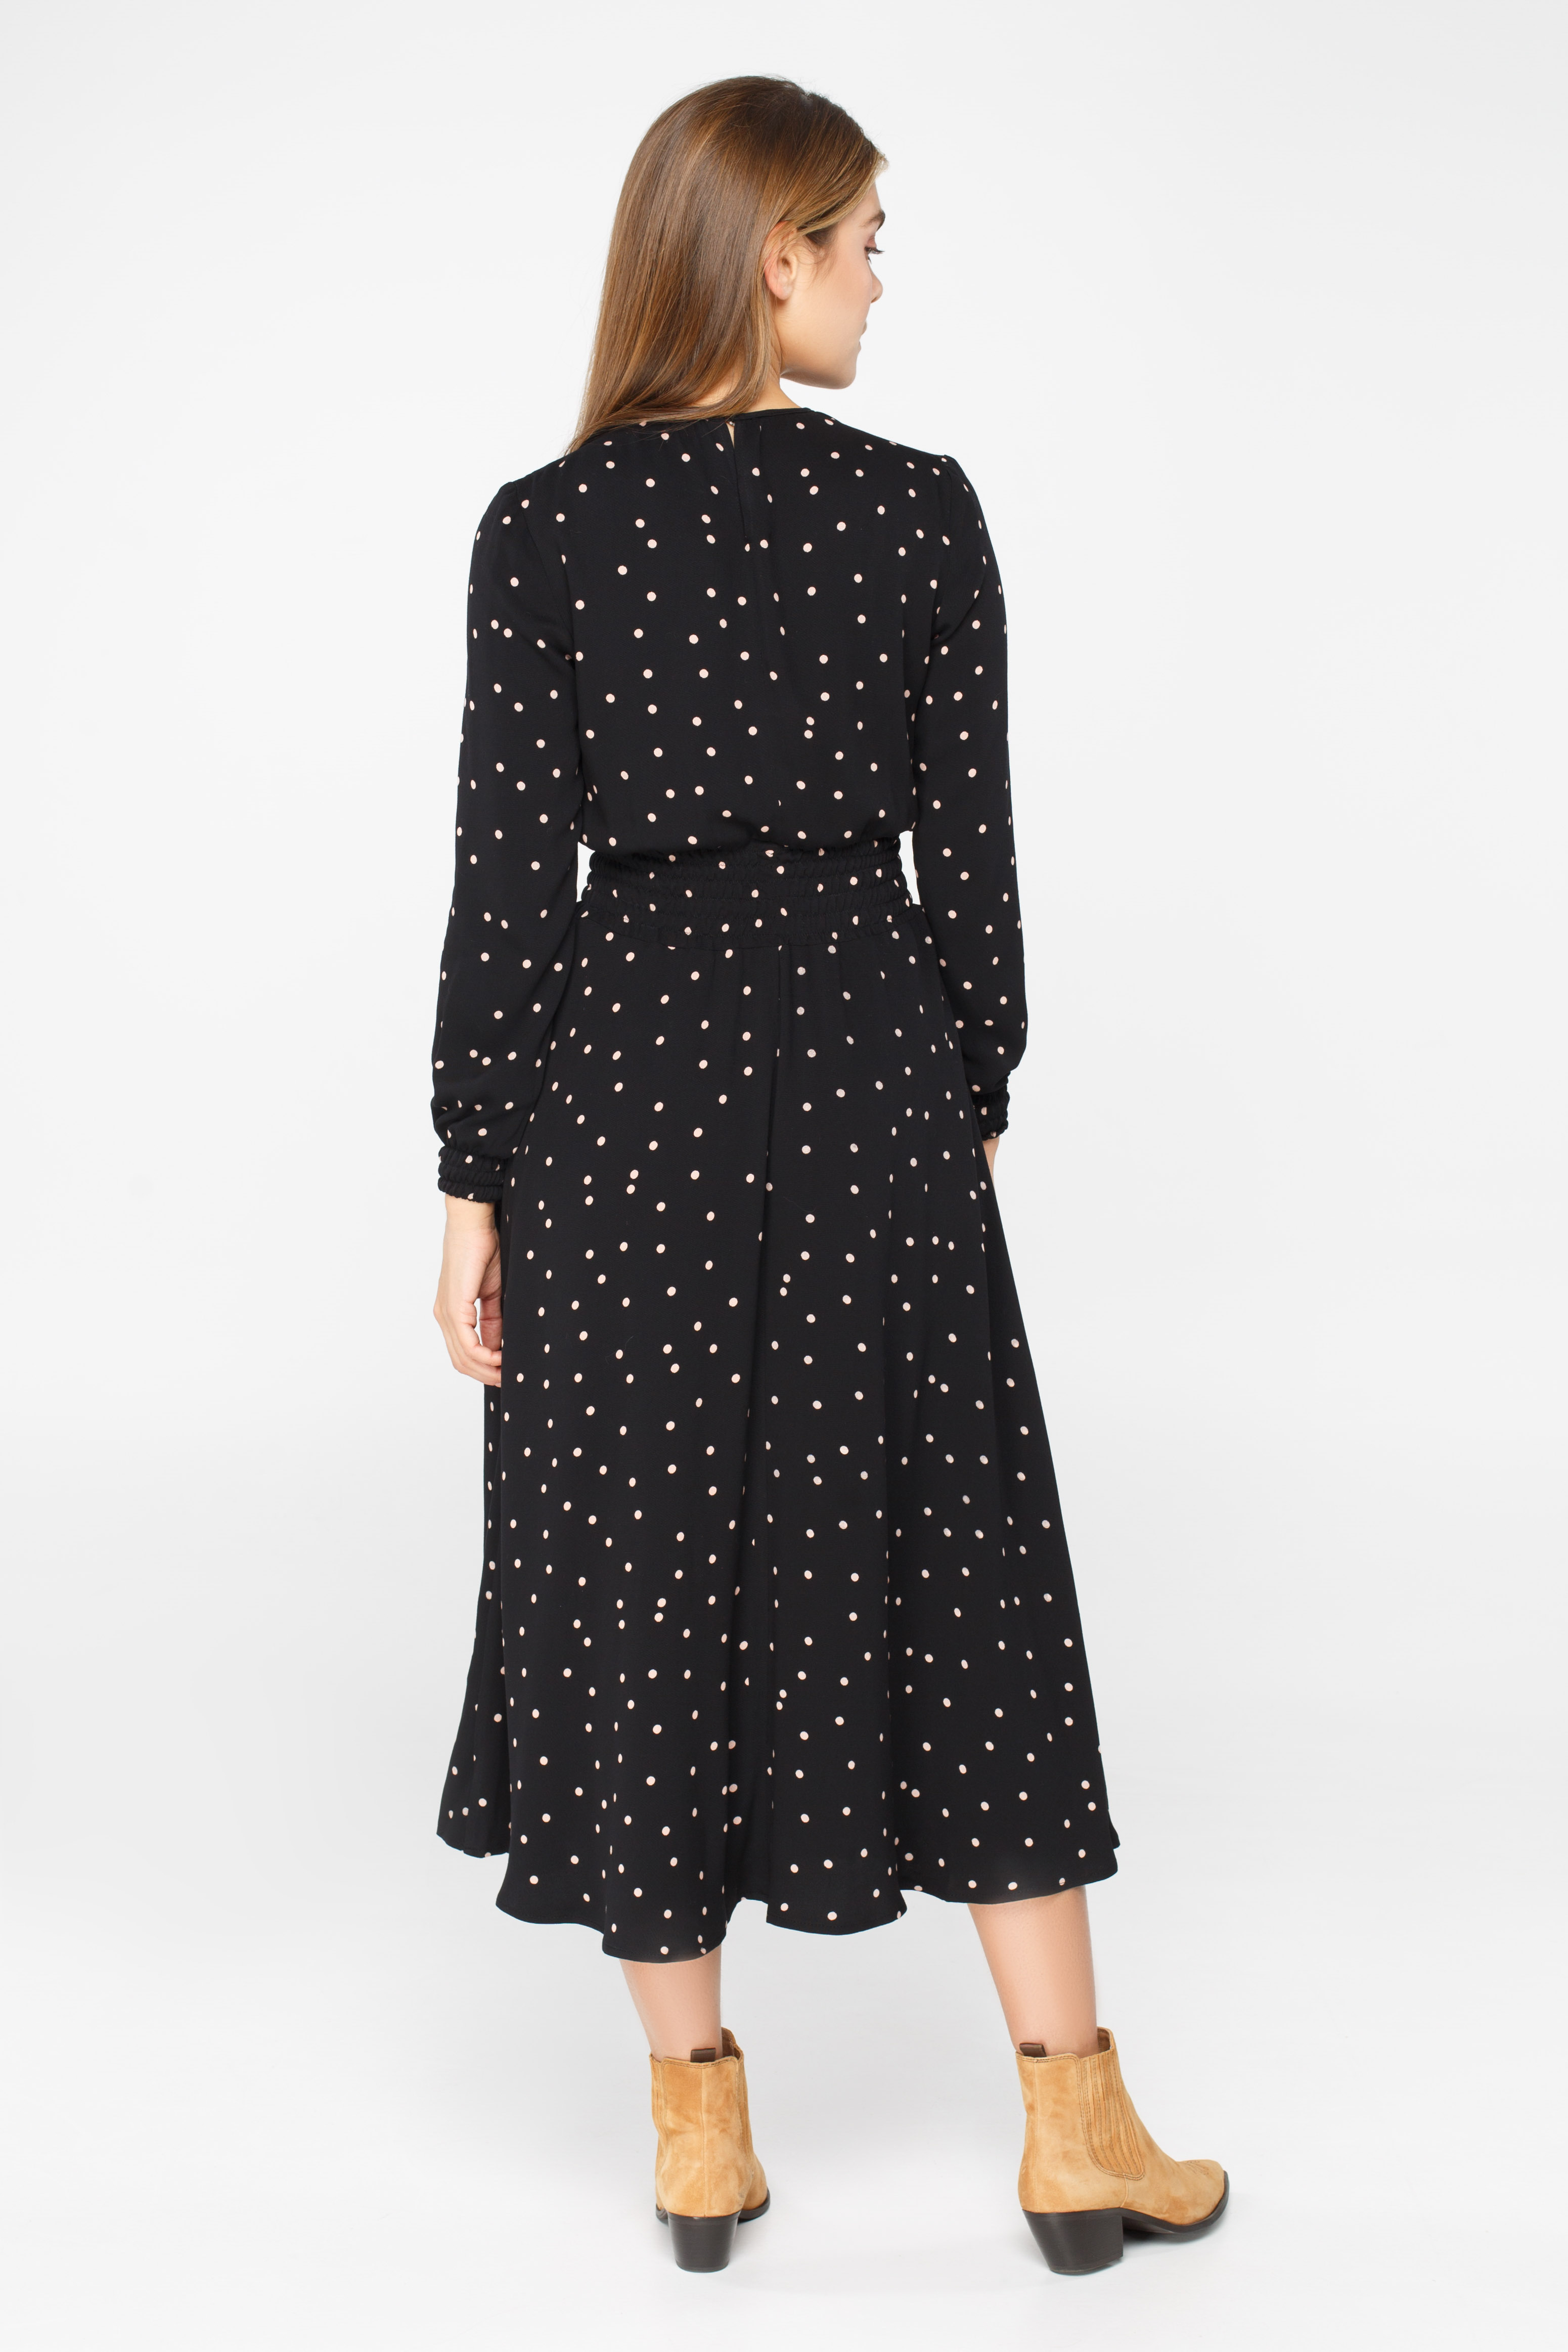 Black polka dot midi dress with elastic waist and cuffs , photo 5